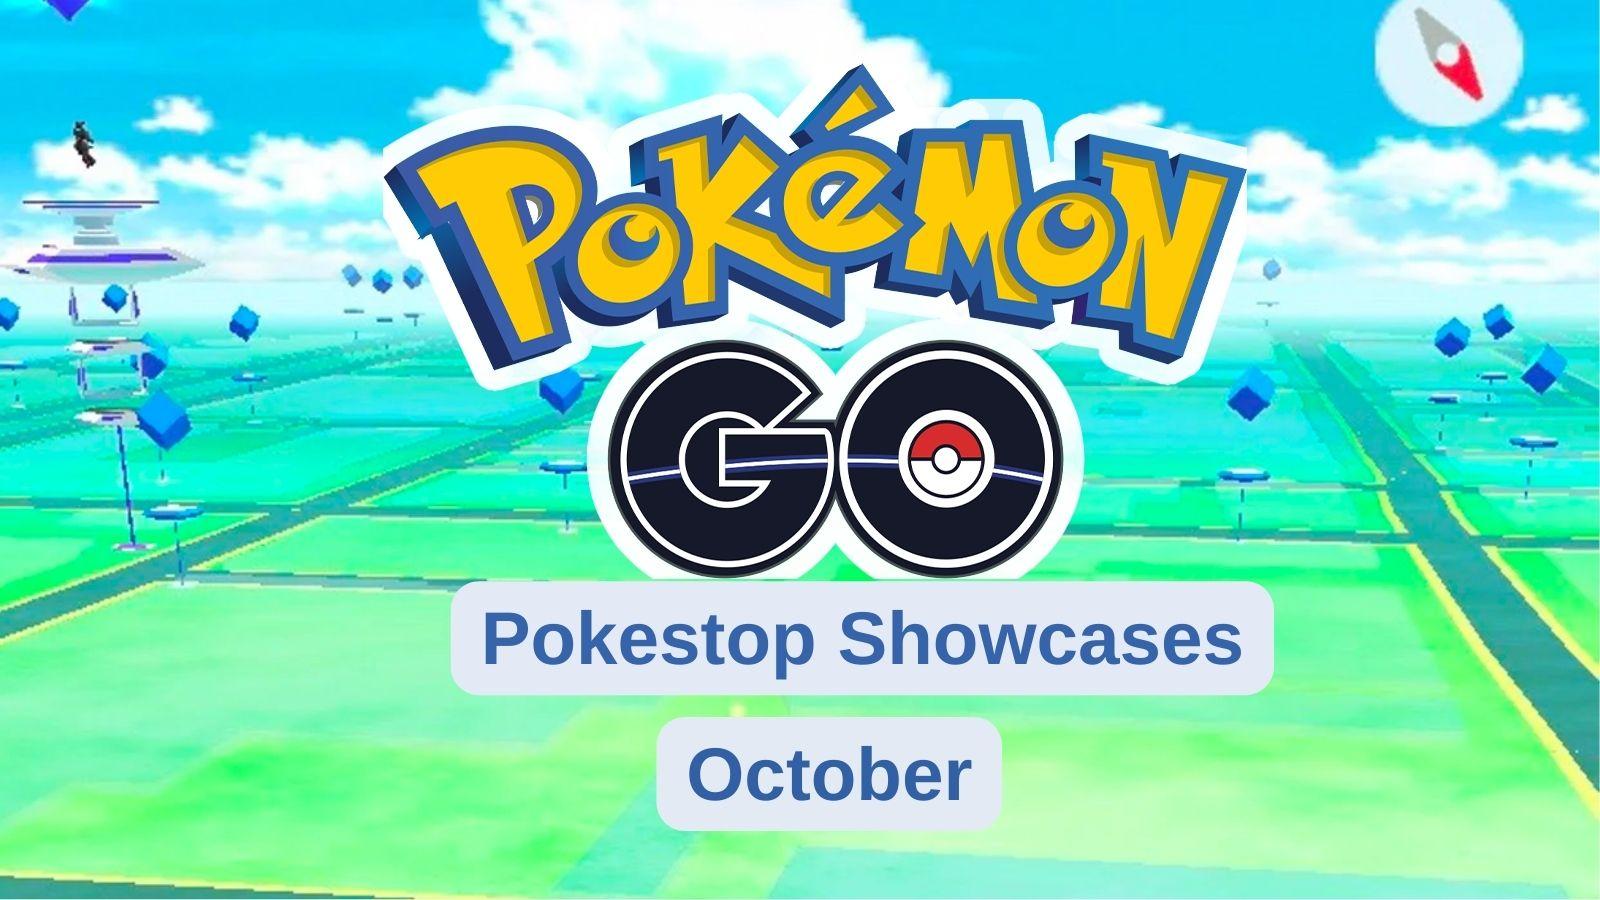 Pokemon GO October schedule for Pokestop showcases